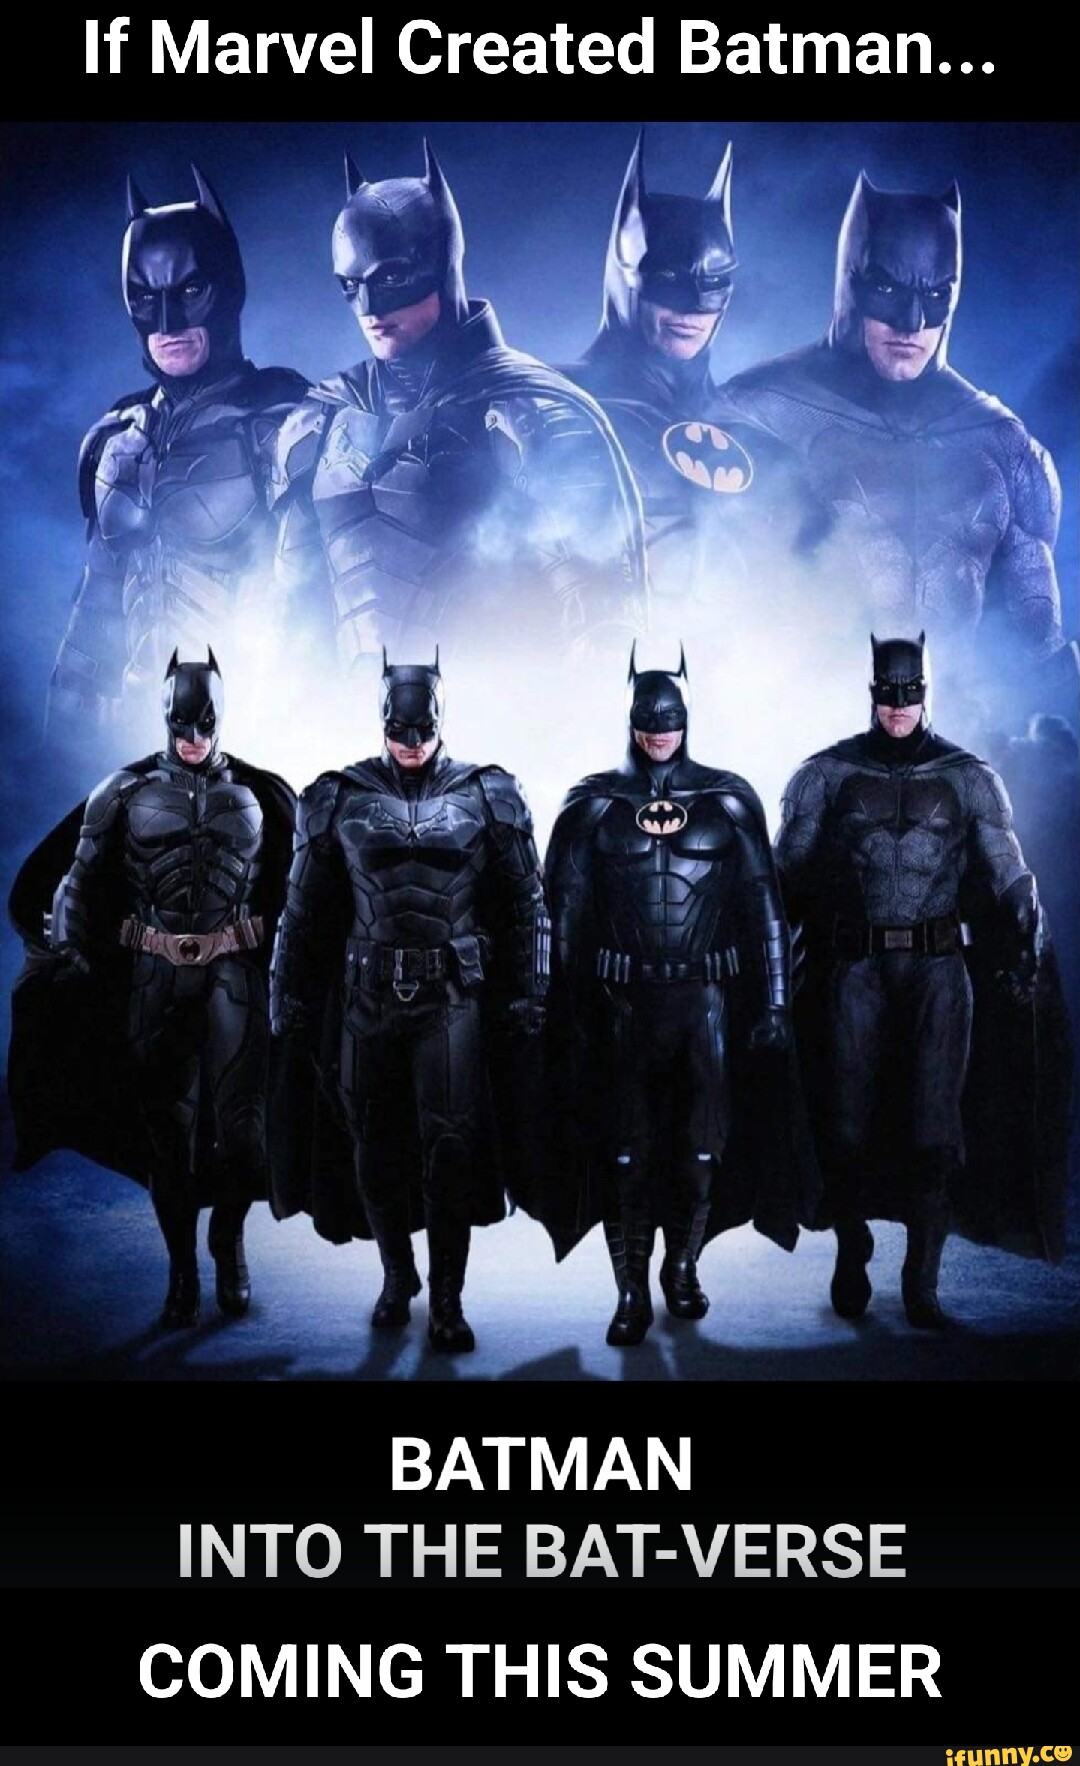 If Marvel Created Batman... ff f I vi BATMAN INTO THE BAT-VERSE COMING THIS  SUMMER - iFunny